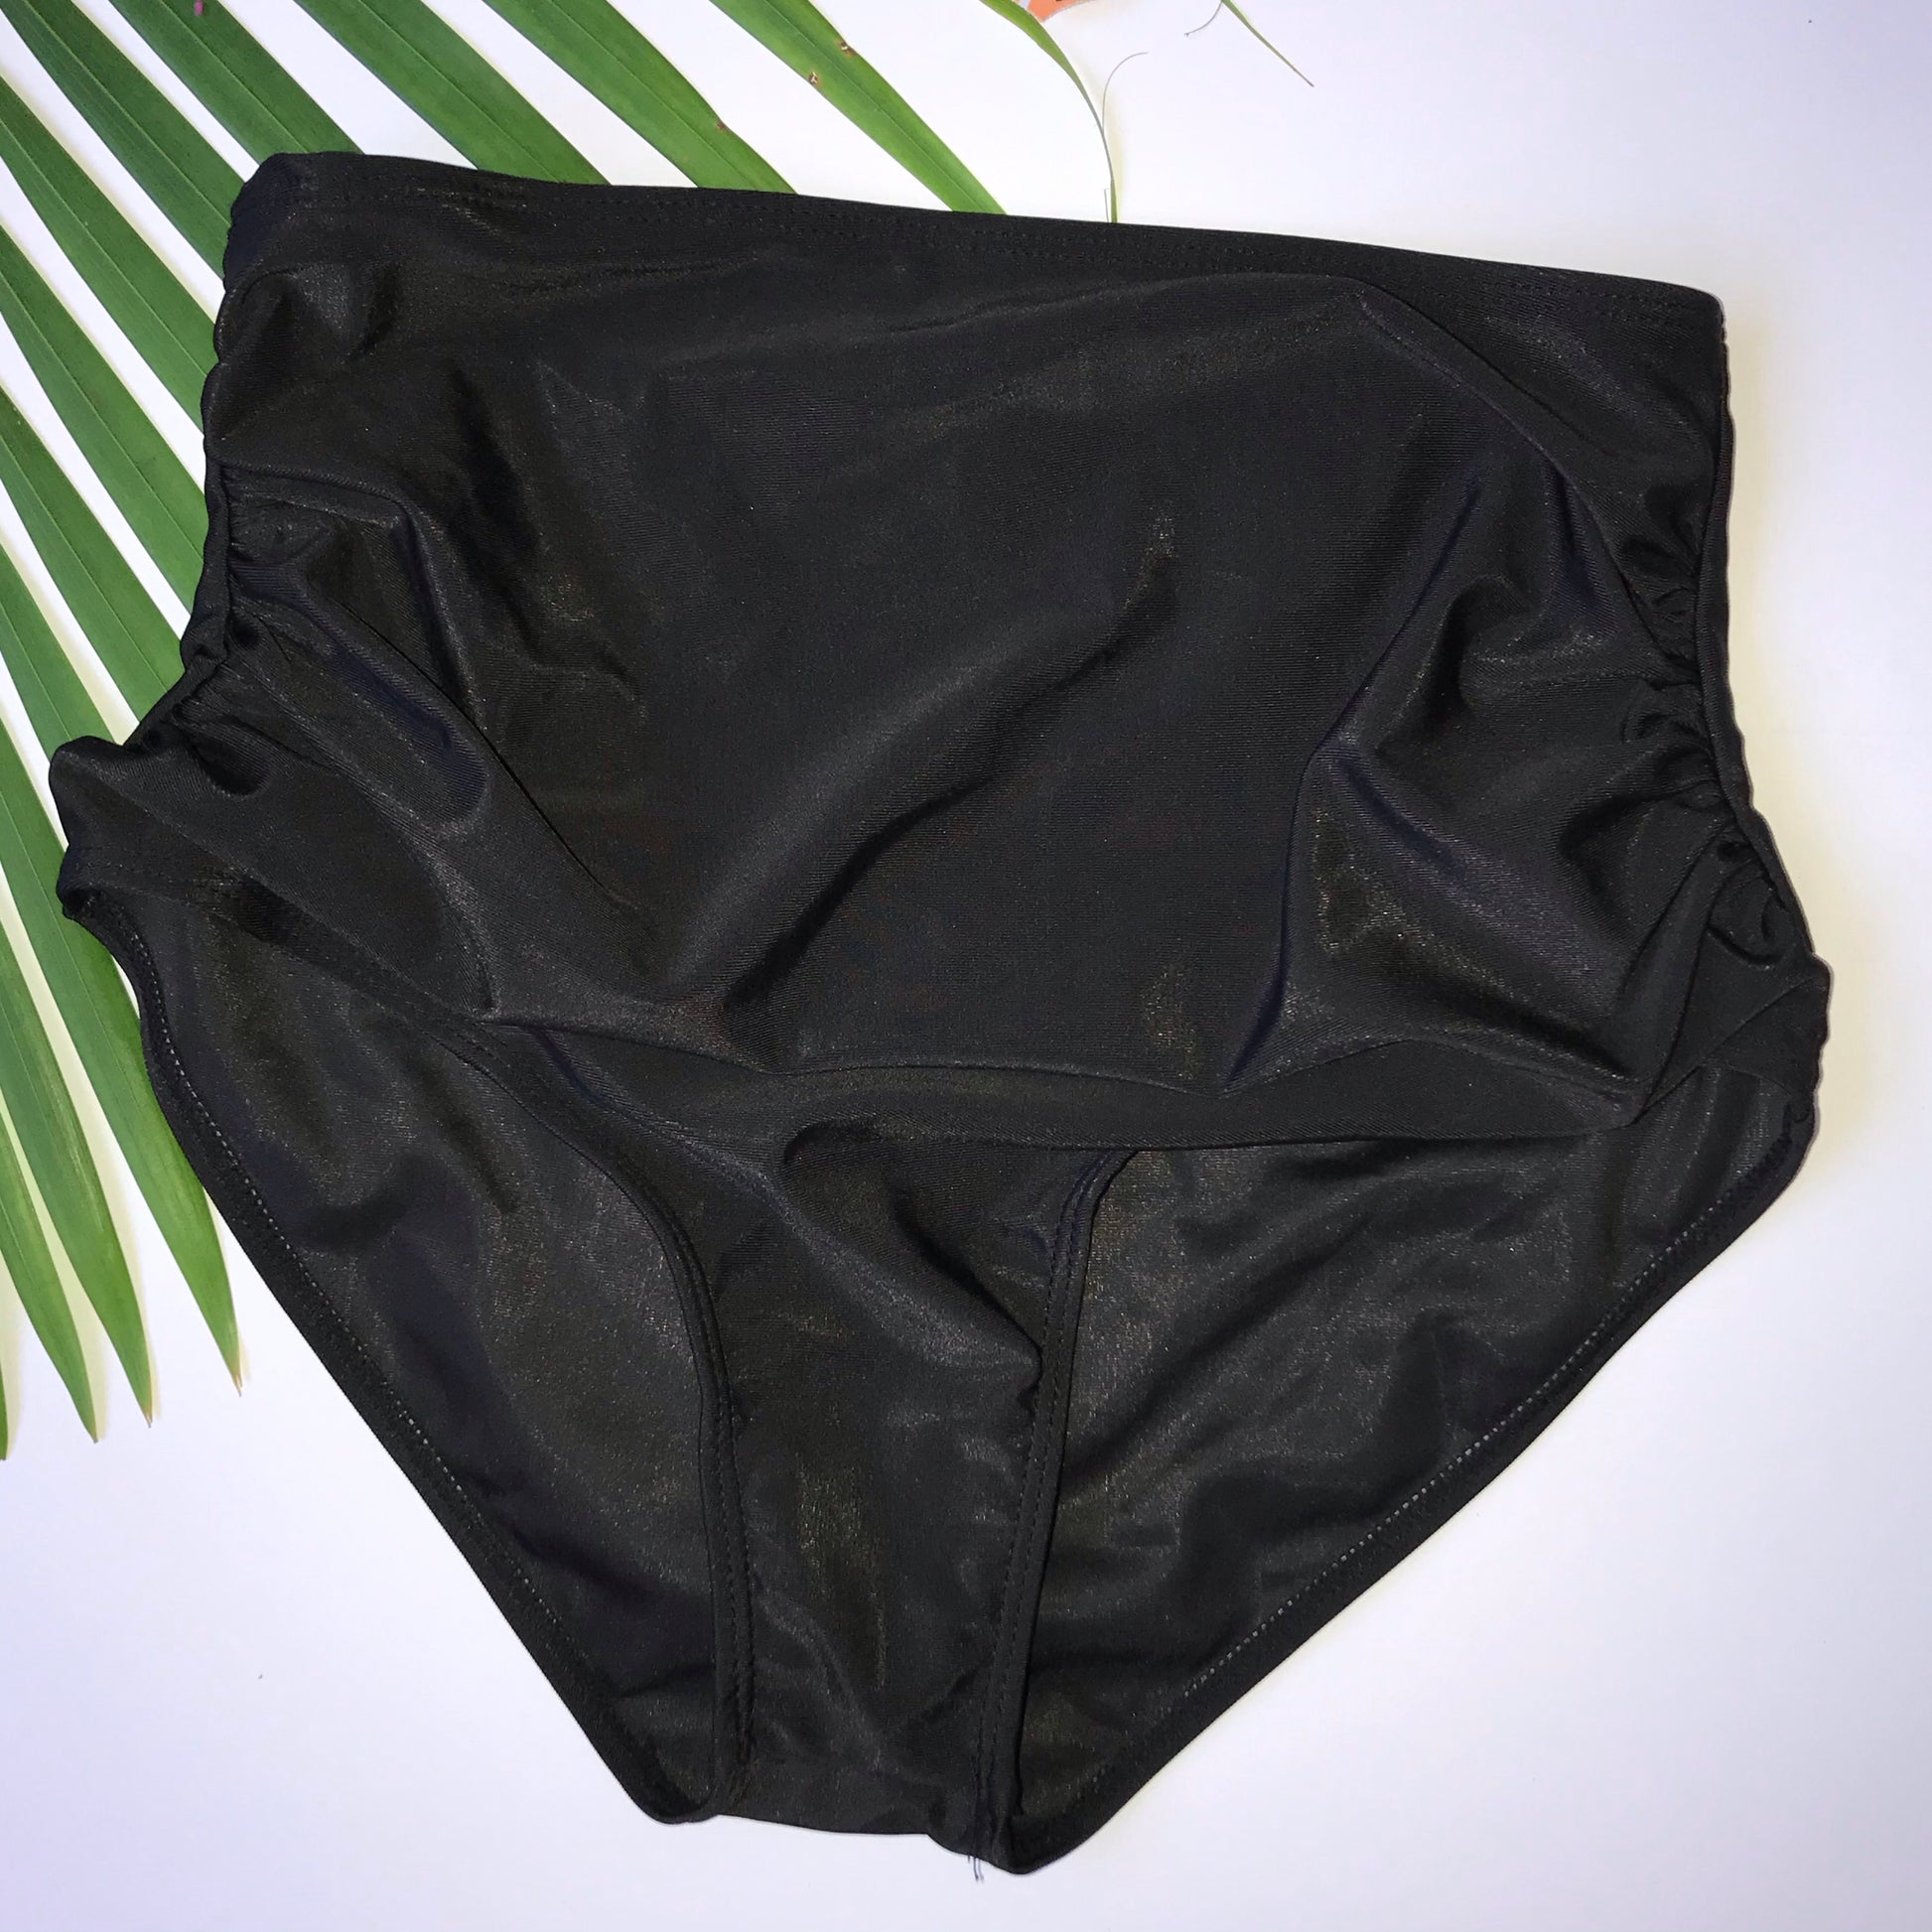 Copy of Black blue onepiece swimsuit Bathingsuit swimsuit - The Lotus Wave 